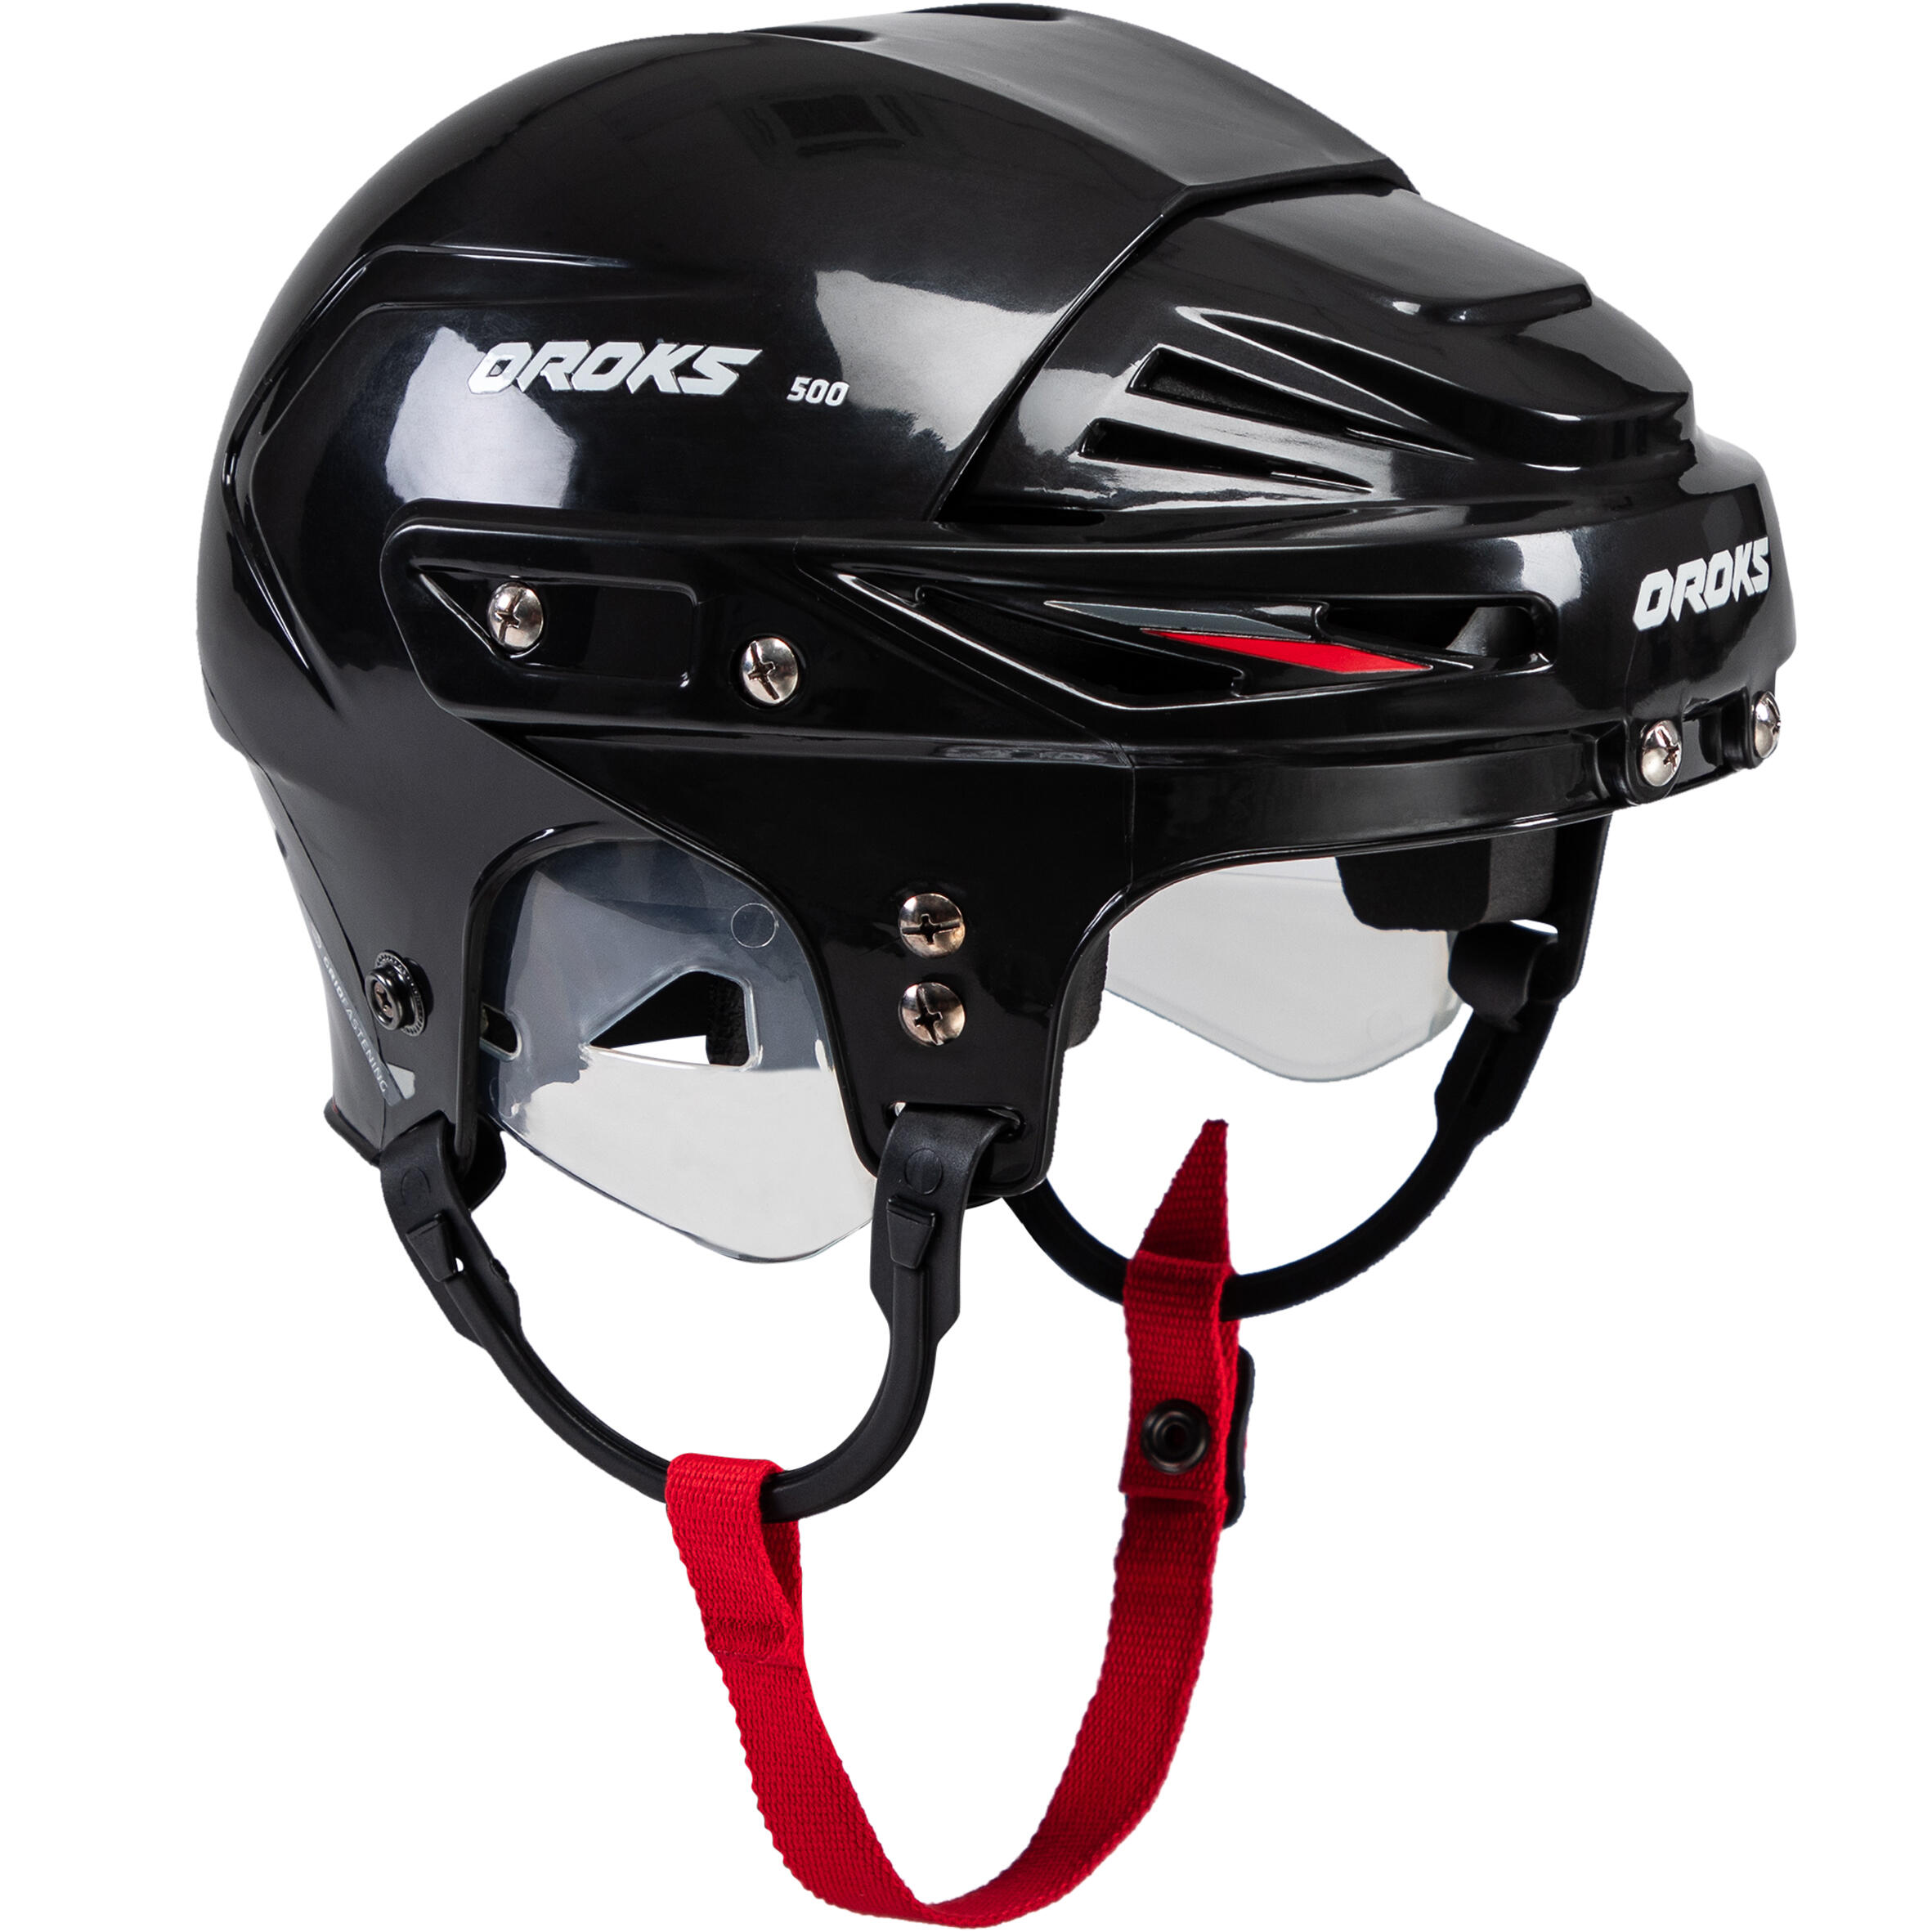 OROKS IH500 JR Hockey Helmet - Black